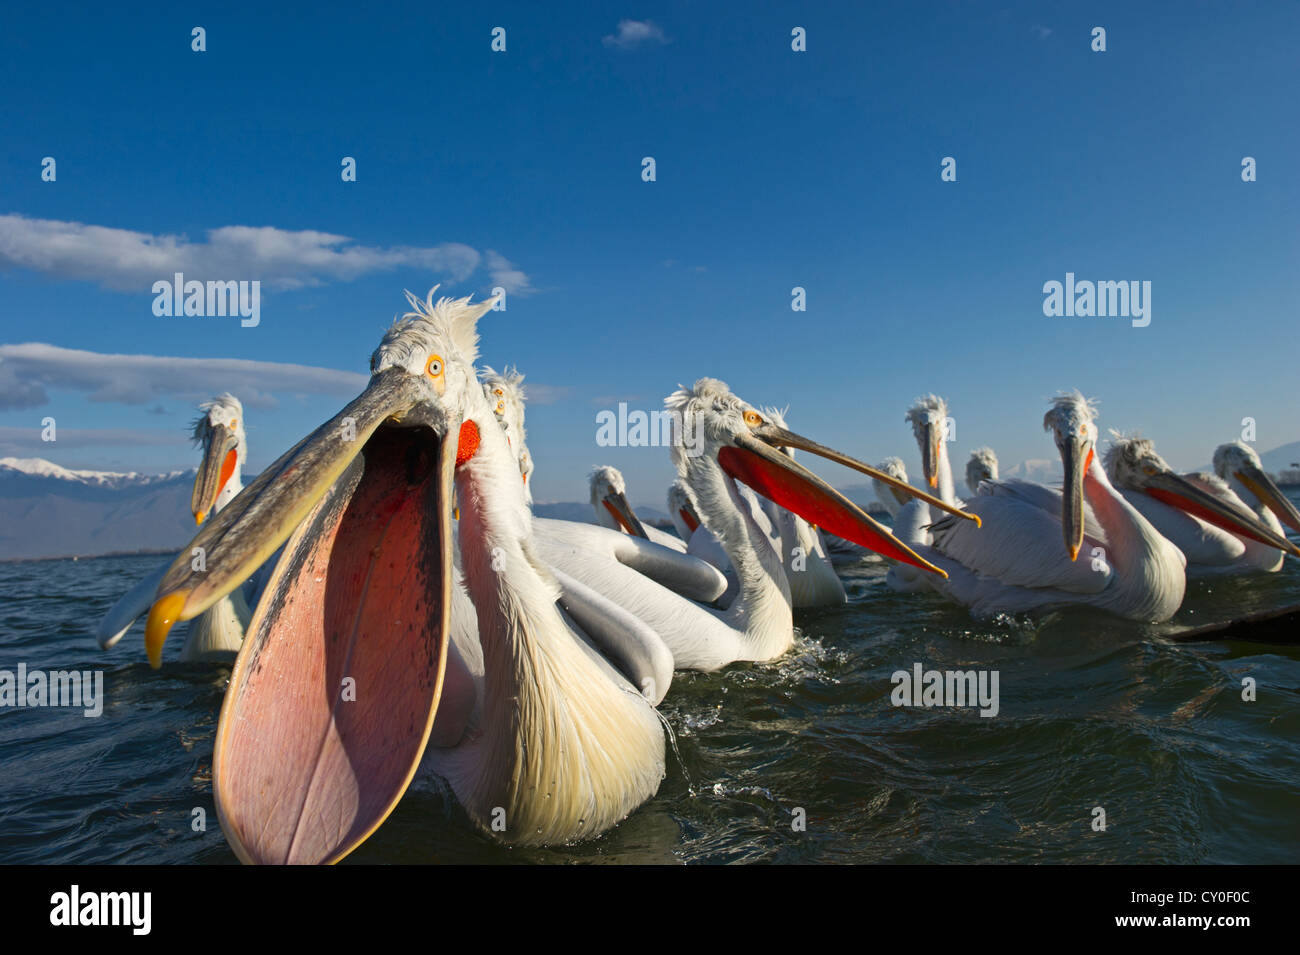 Dalmatinische Pelikane Pelicanus Cristatus Februar von Angler am See Kerkini Nordgriechenland gefüttert Stockfoto